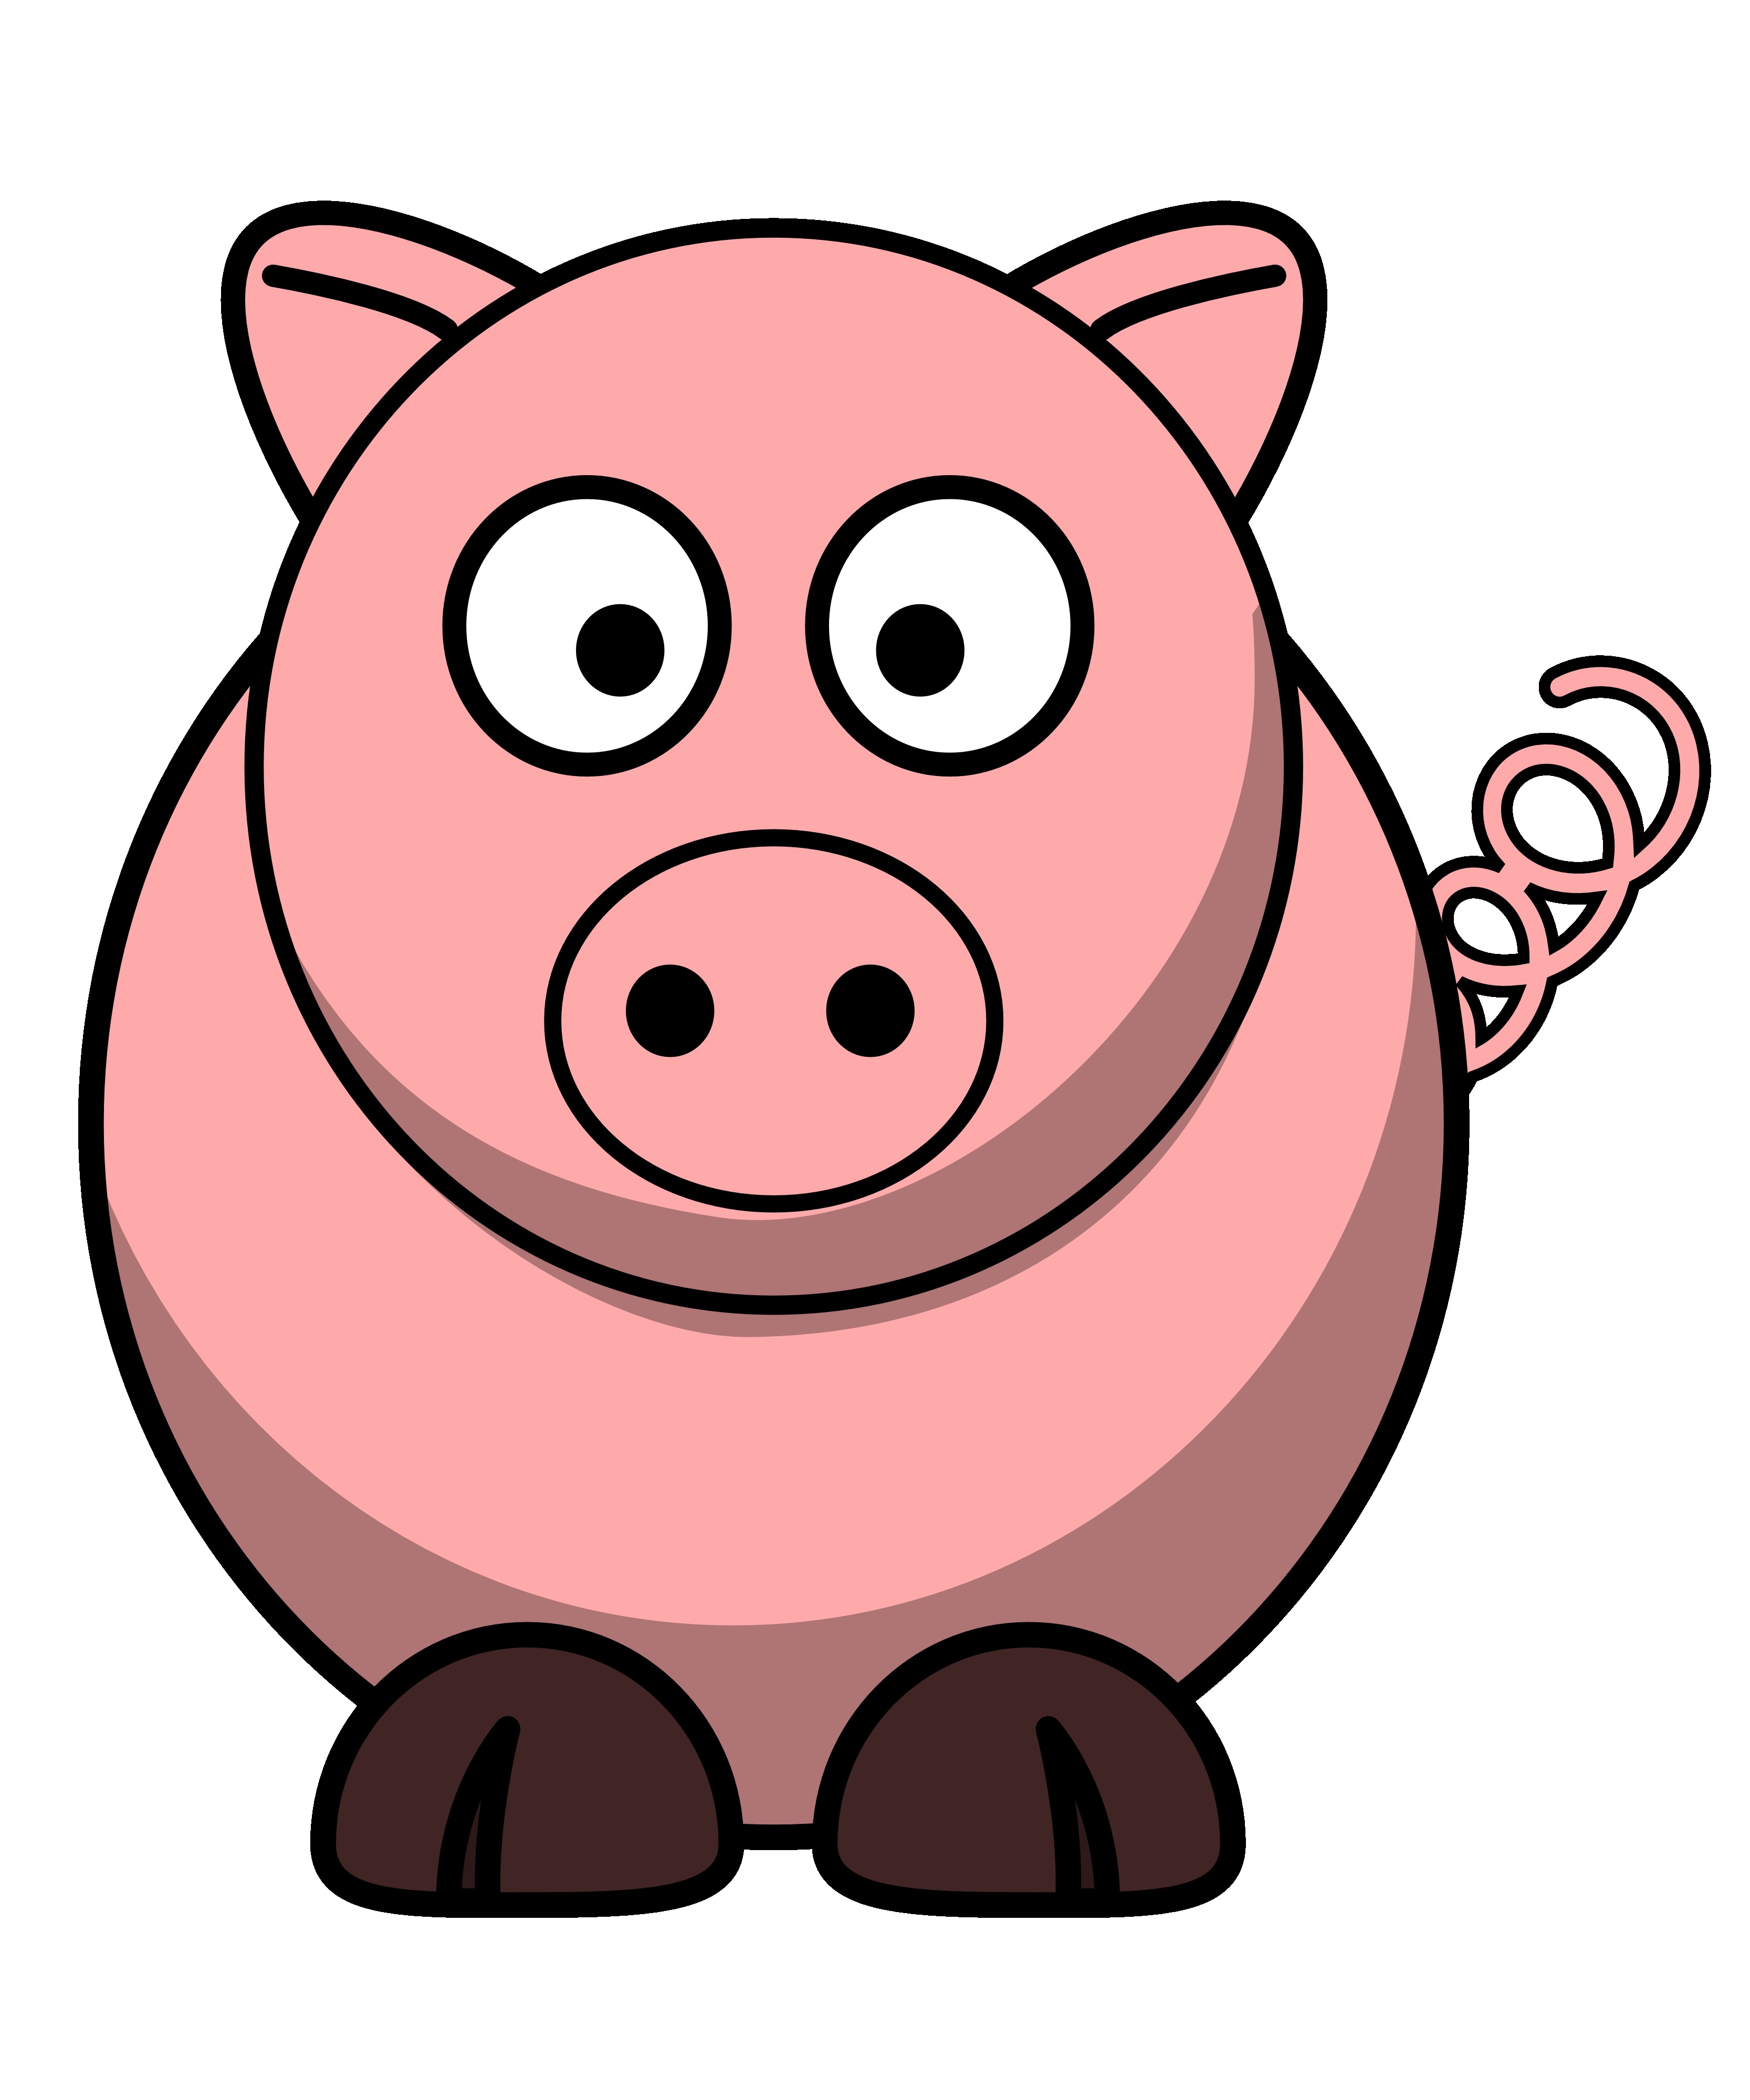 Pig Clip Art Microsoft | Clipart Panda - Free Clipart Images